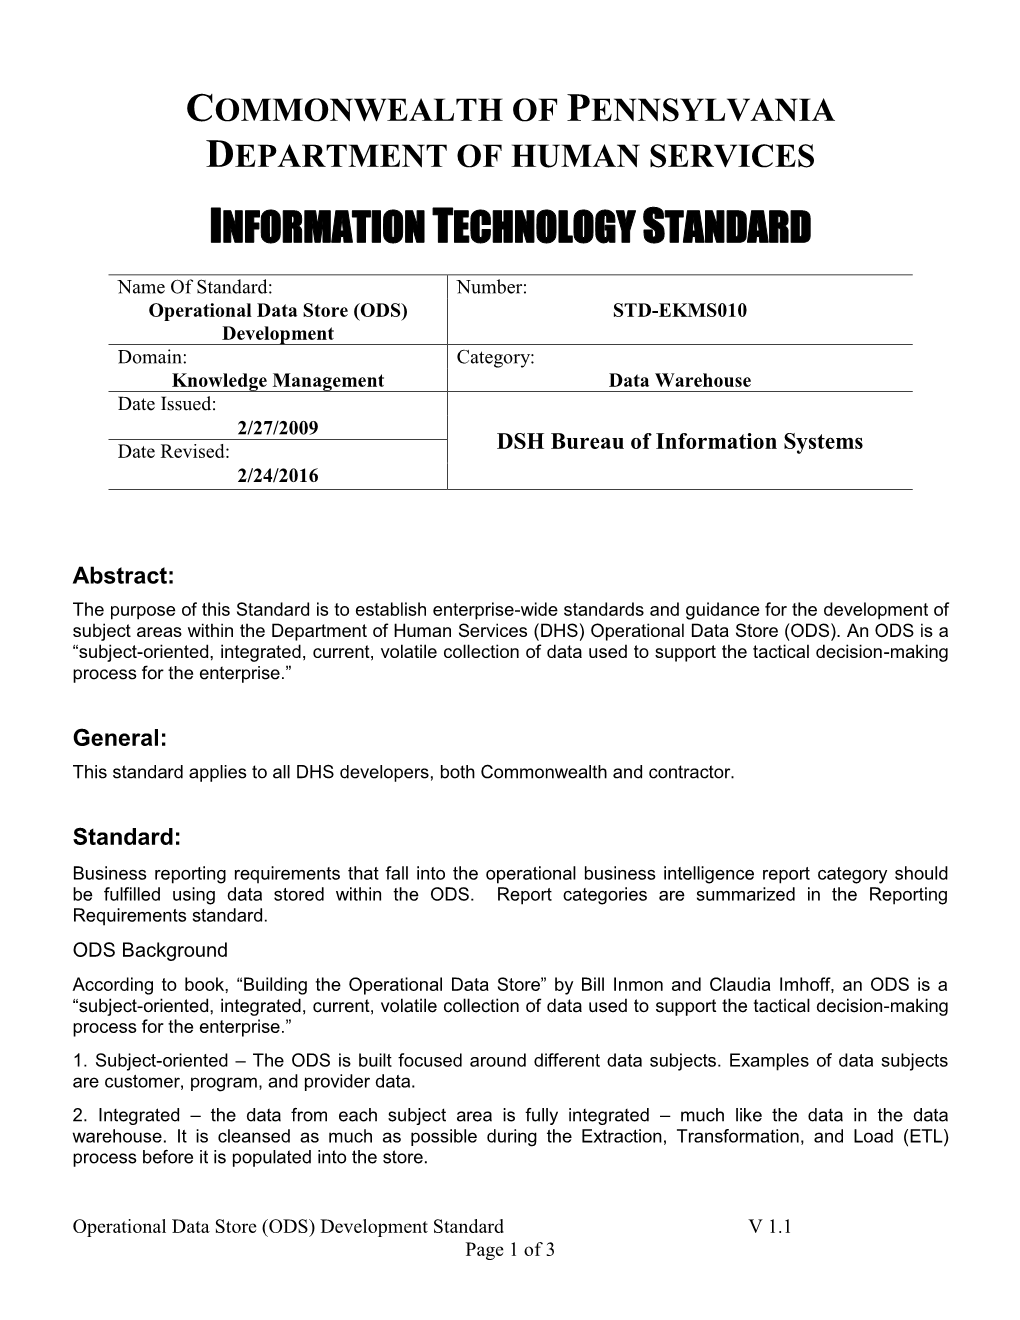 Information Technology Standard